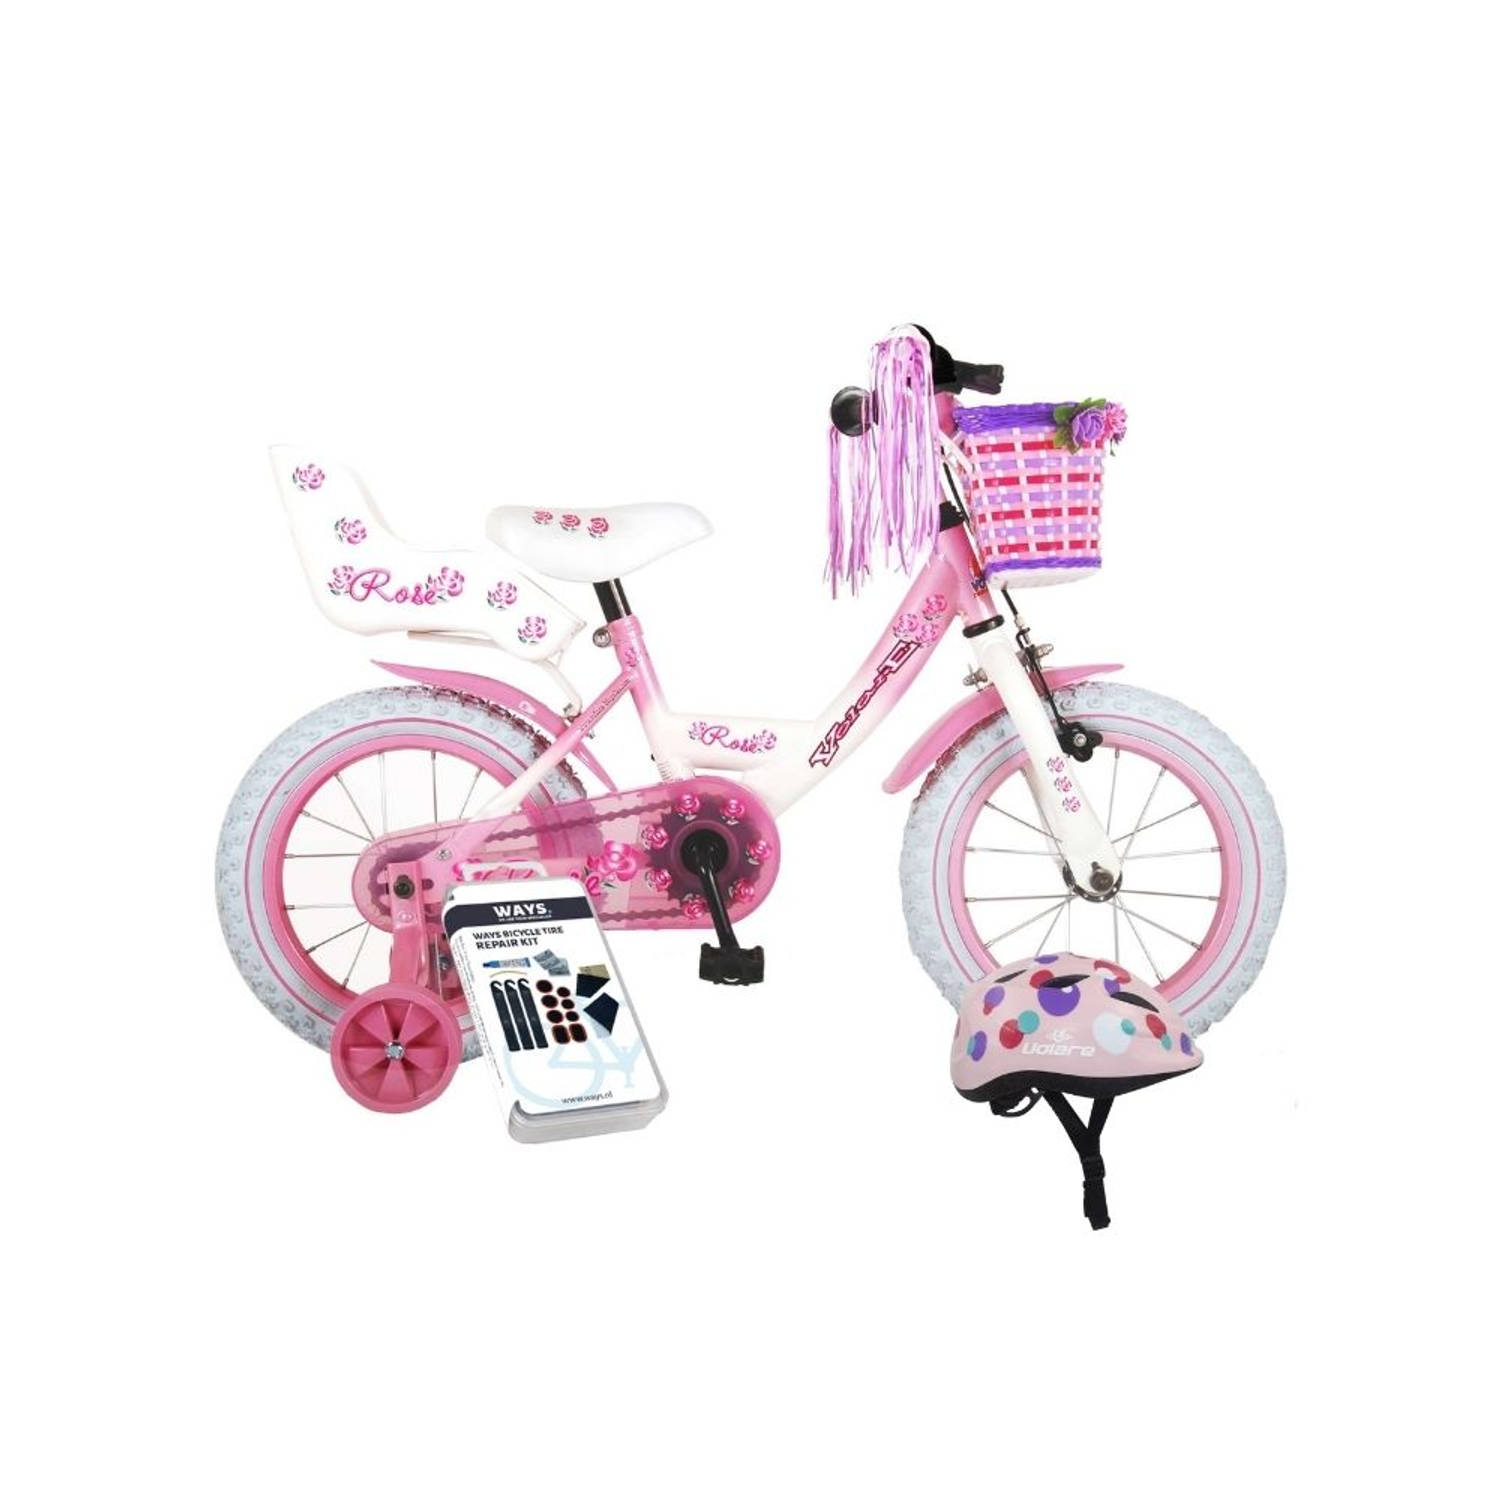 Volare Kinderfiets Rose - 14 inch - Roze/Wit - Inclusief fietshelm & accessoires